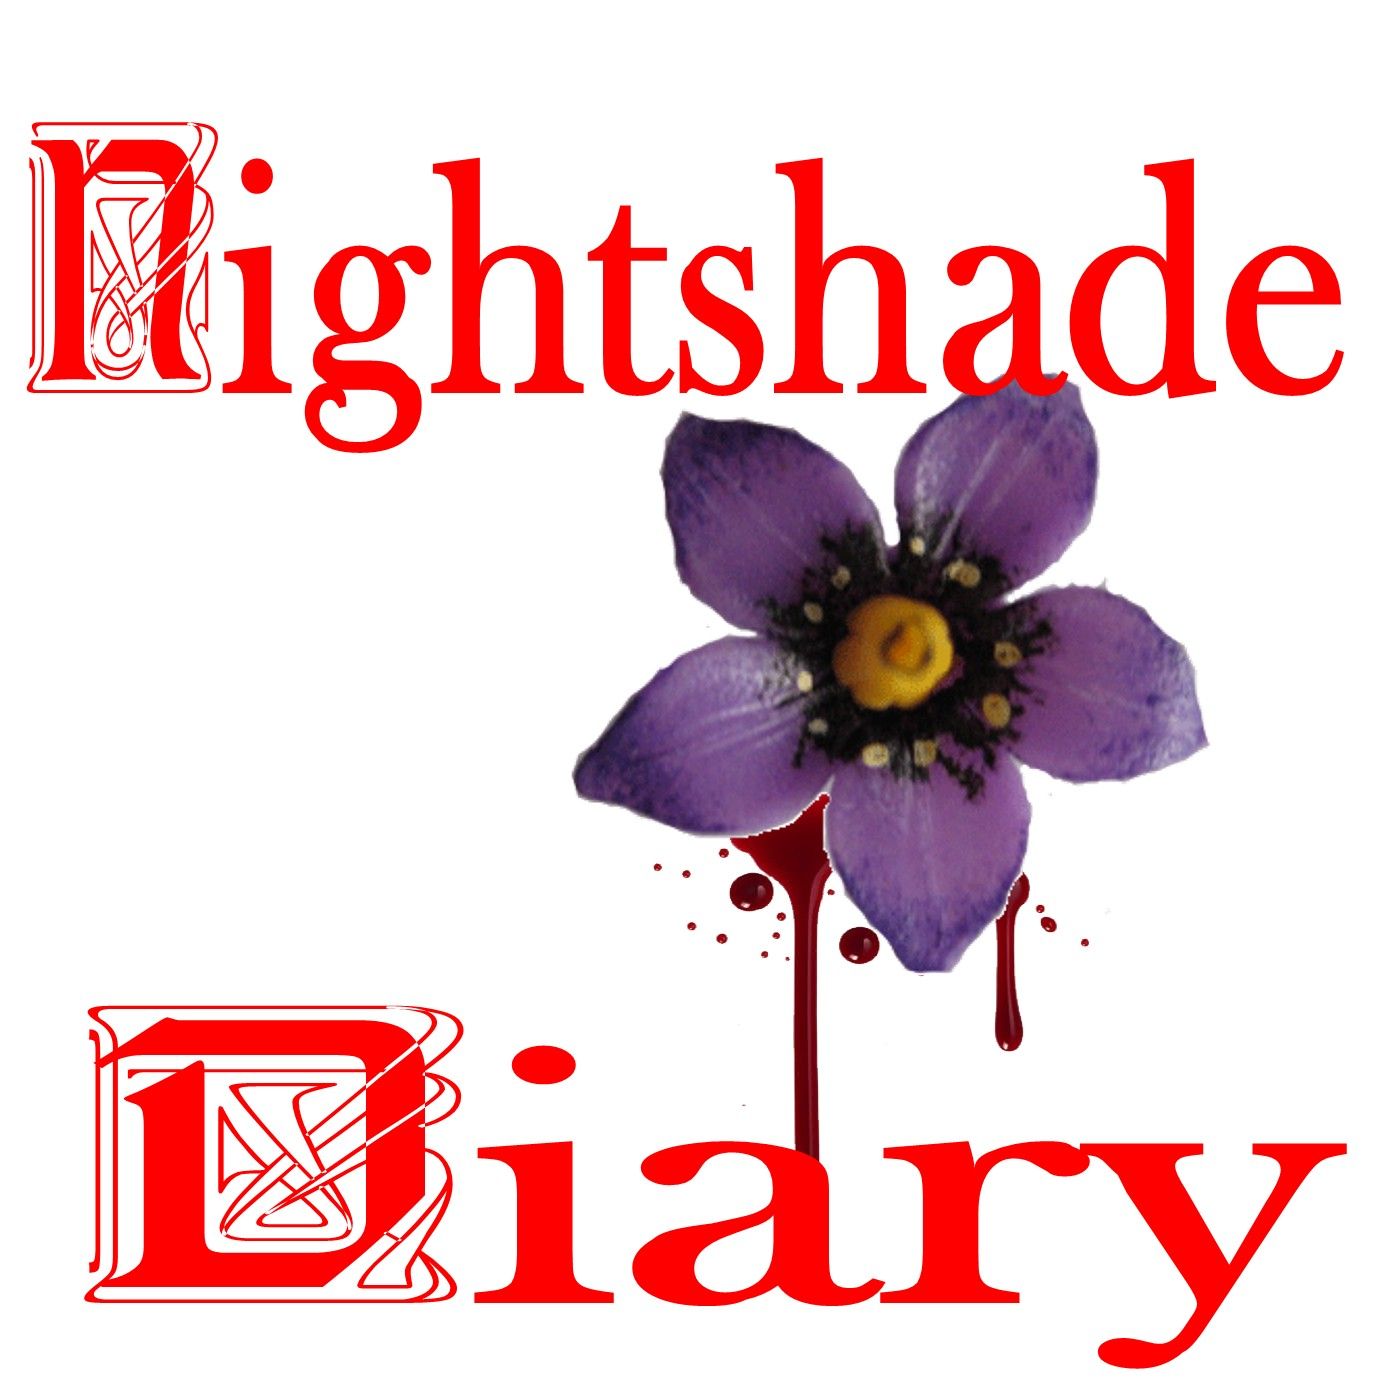 Nightshade Diary